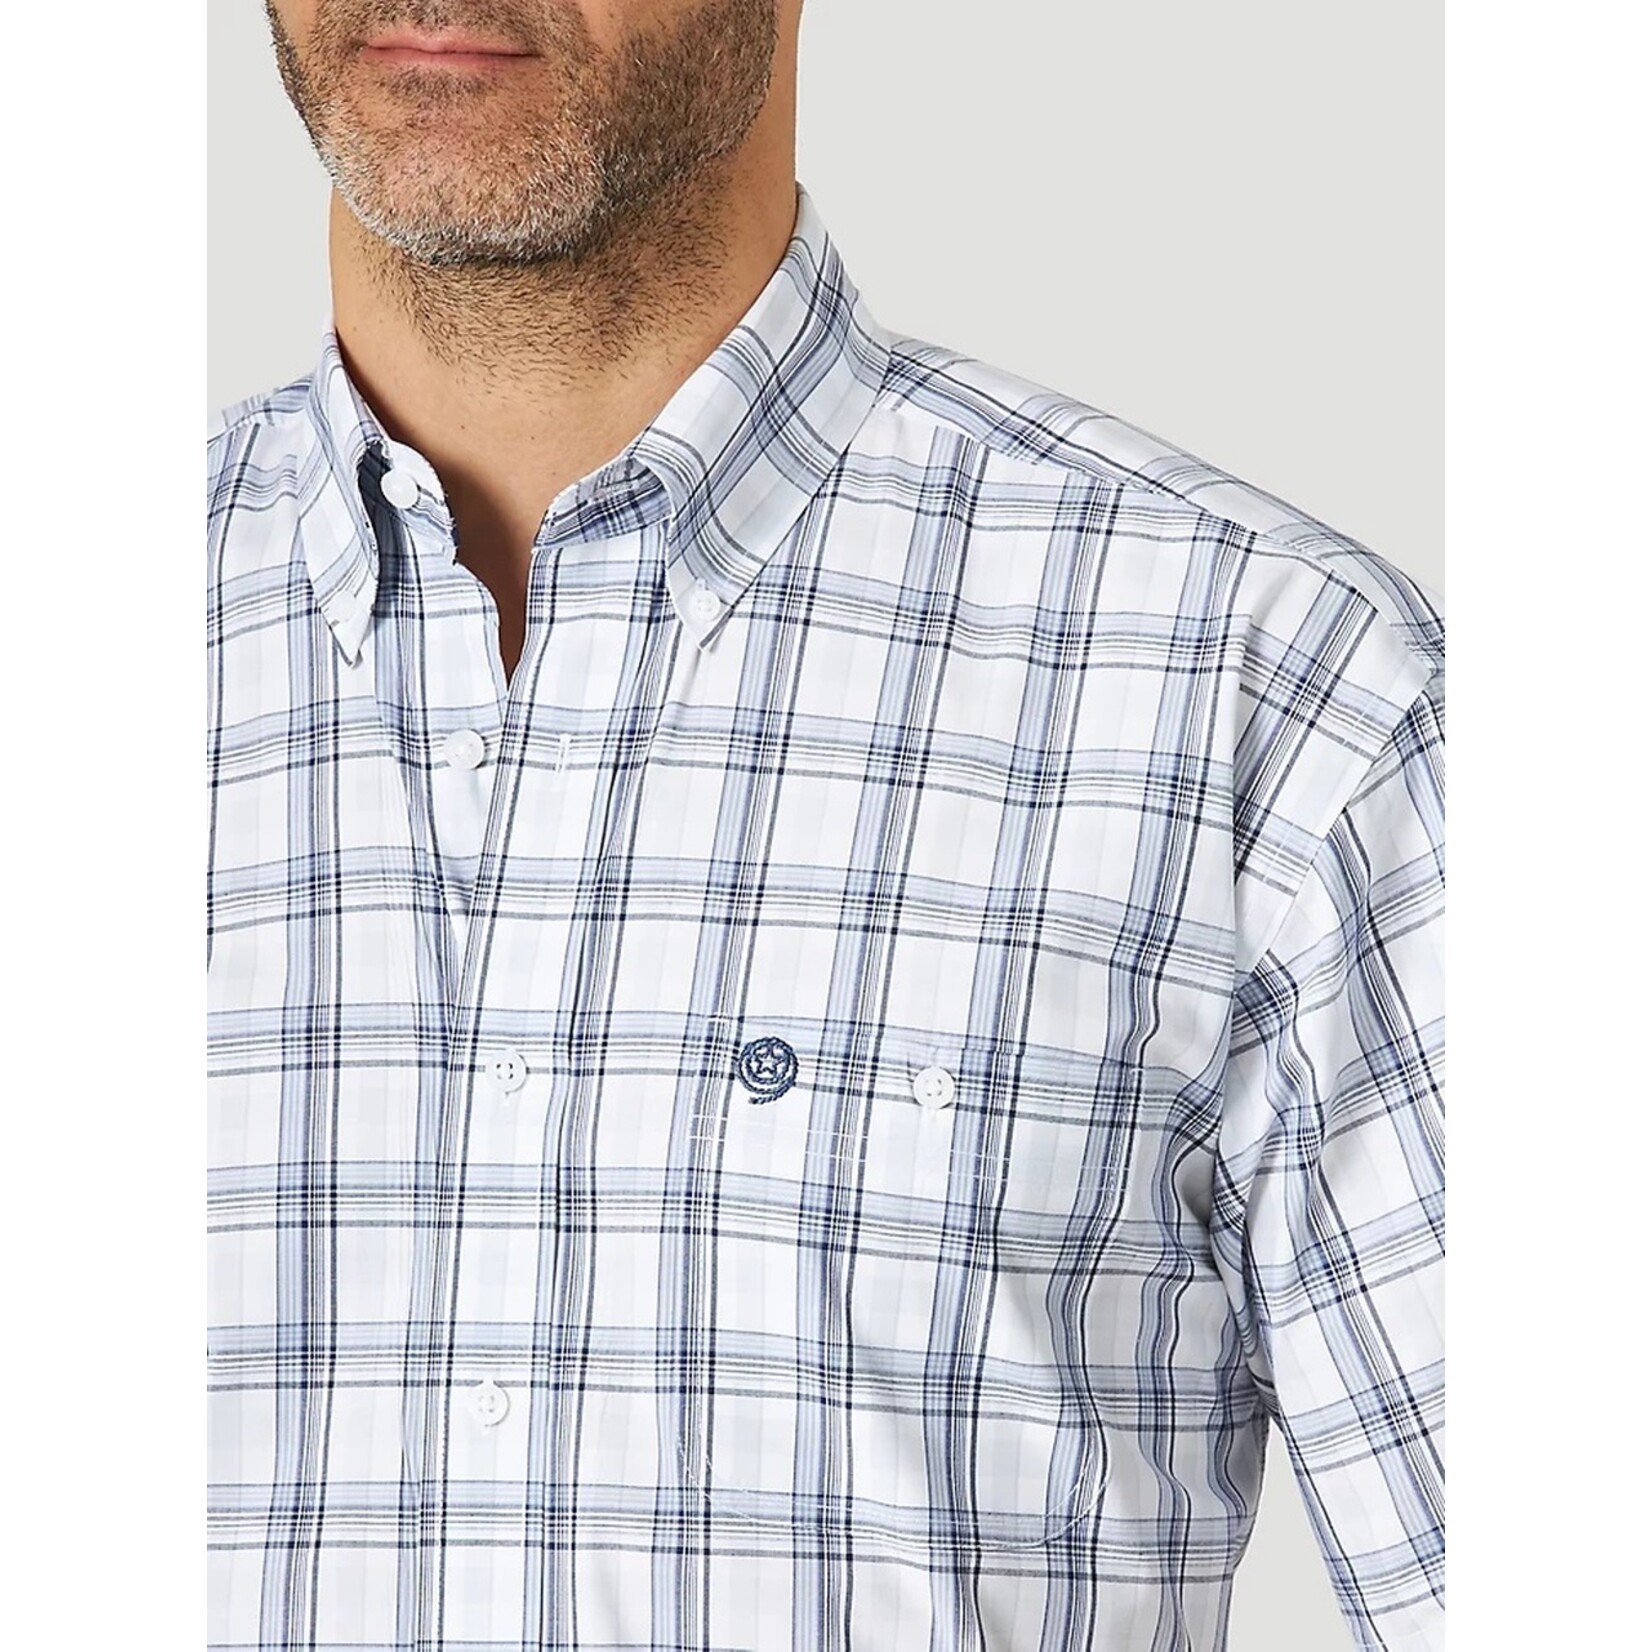 Wrangler Wrangler - Men's George Strait Collection Short Sleeve Button Down Shirt - MGSN953